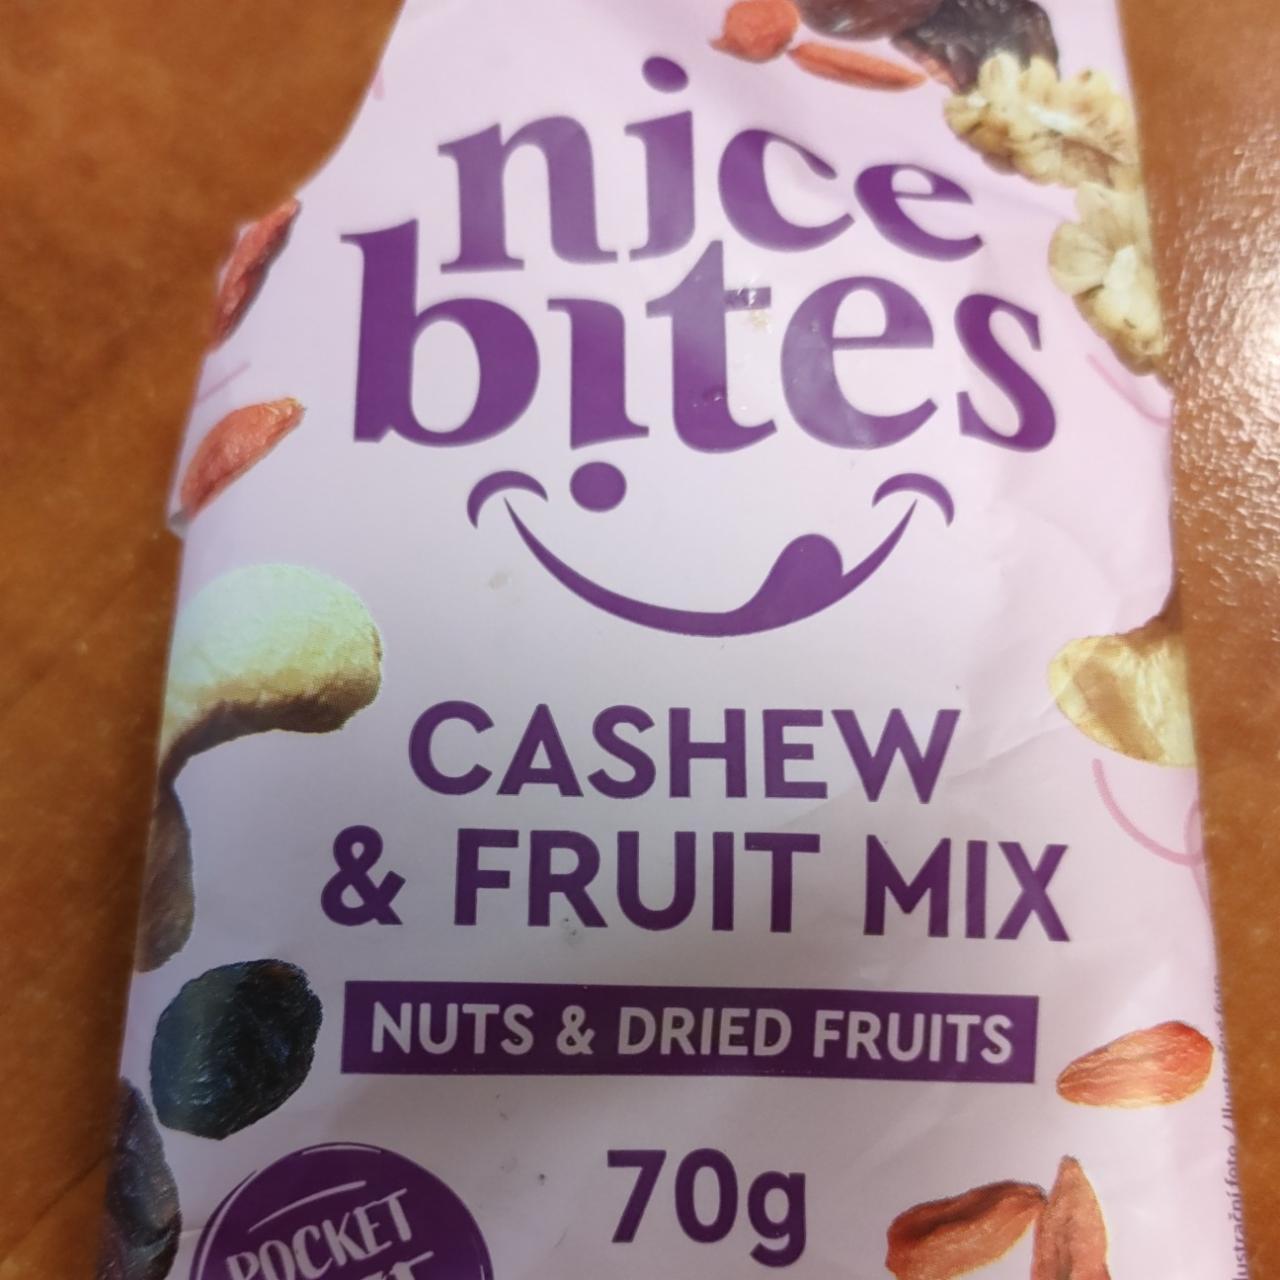 Fotografie - Cashew & Fruit mix Nice Bites